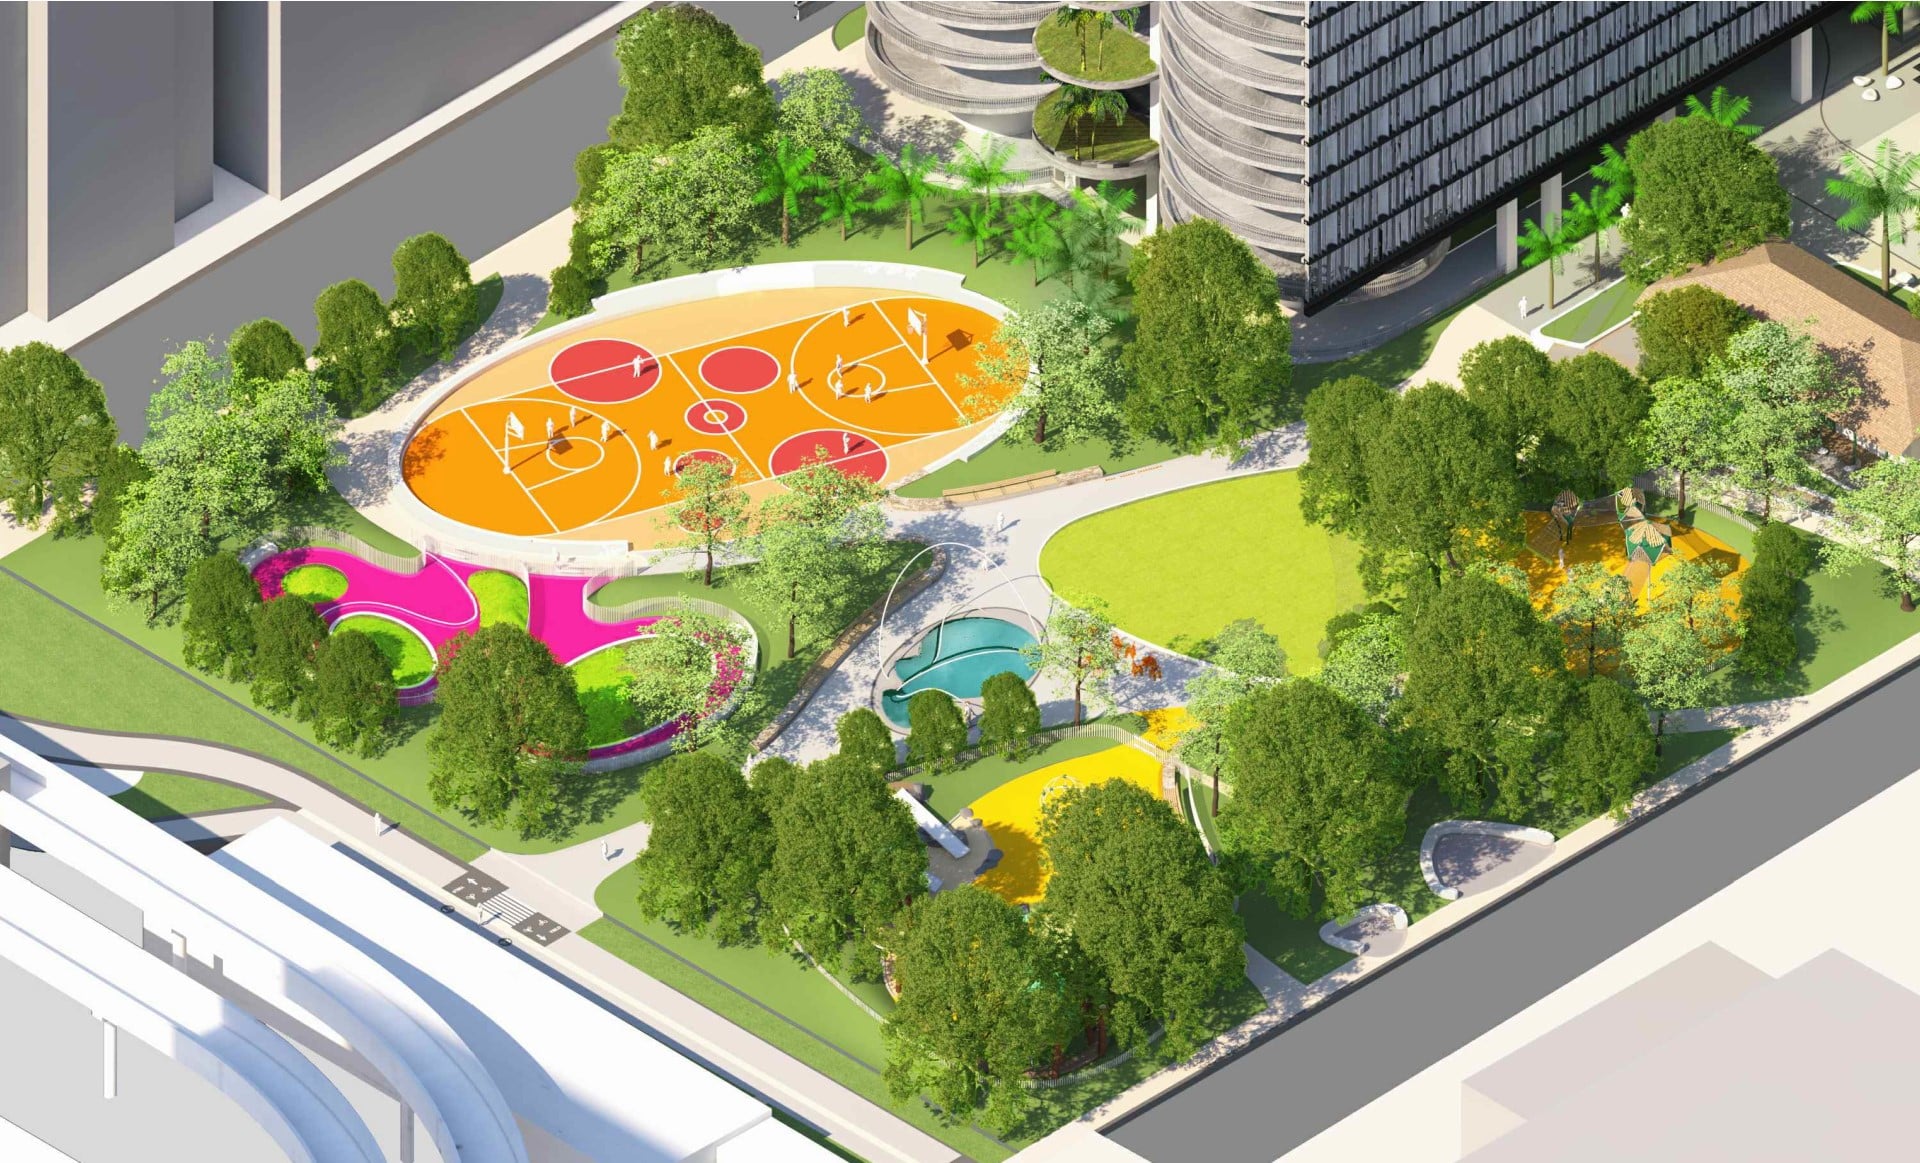 1 Southside Park, designed by SHoP Architects. Courtesy of JDS Development Group.